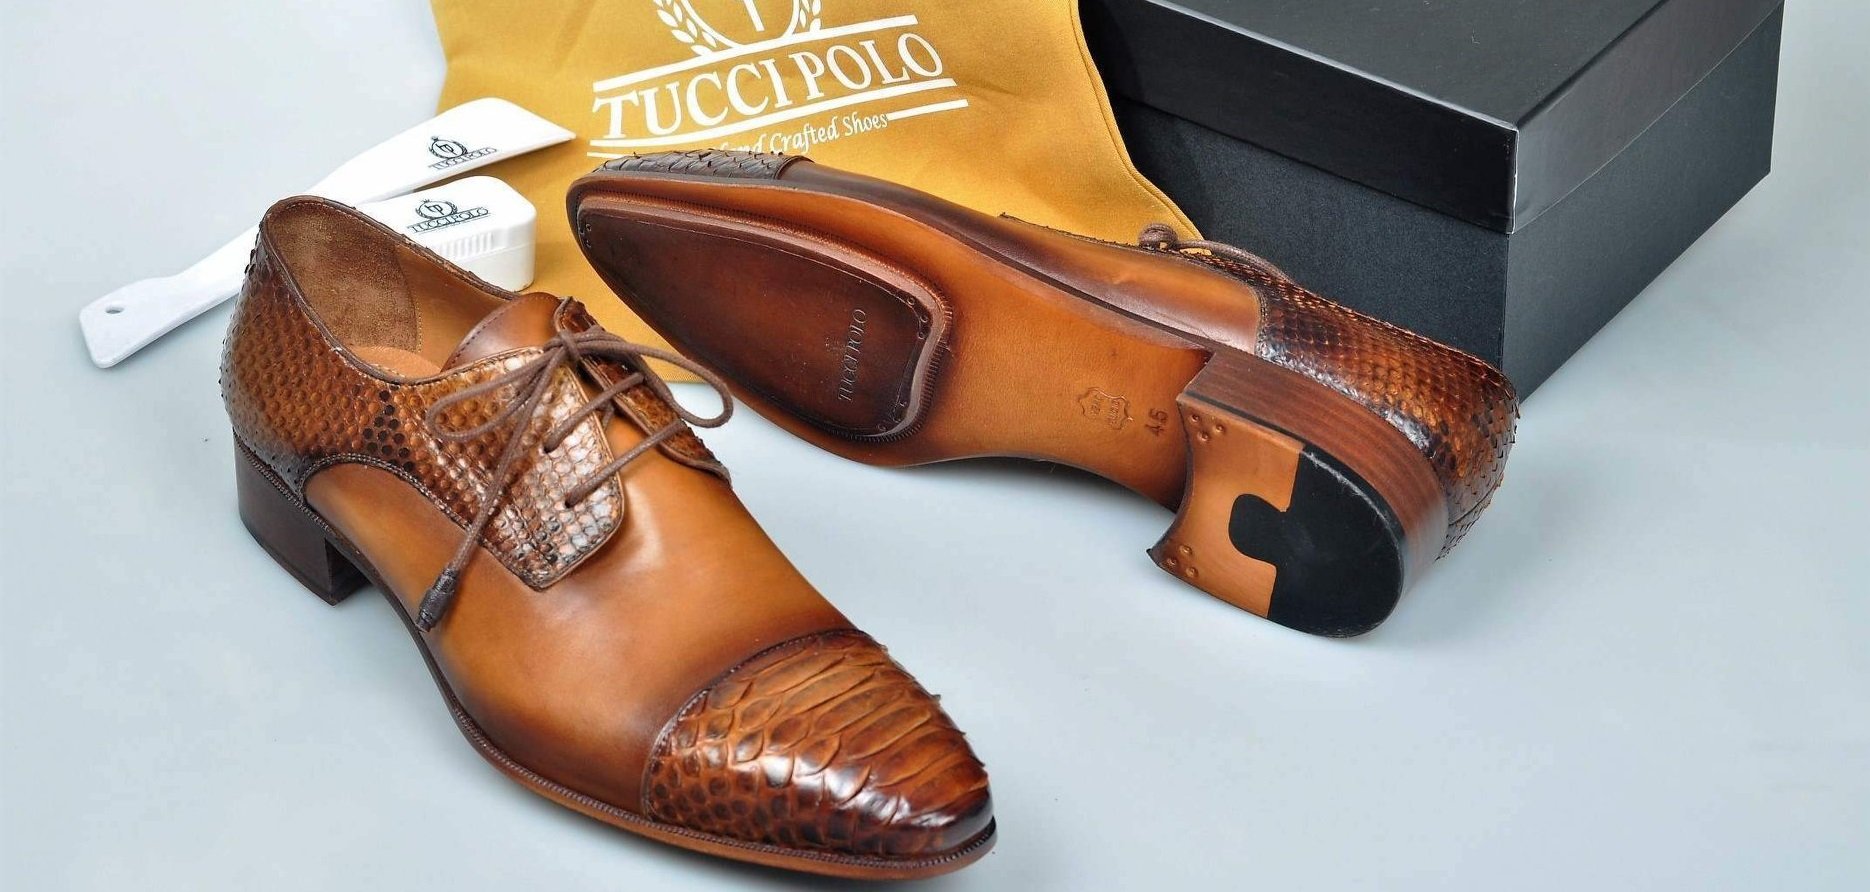 Tuccipolo Handmade Luxury Italian Leather Shoes 38e8d13c 0bd5 4c4e 9d91 9485c26c07dd ?v=1608788753